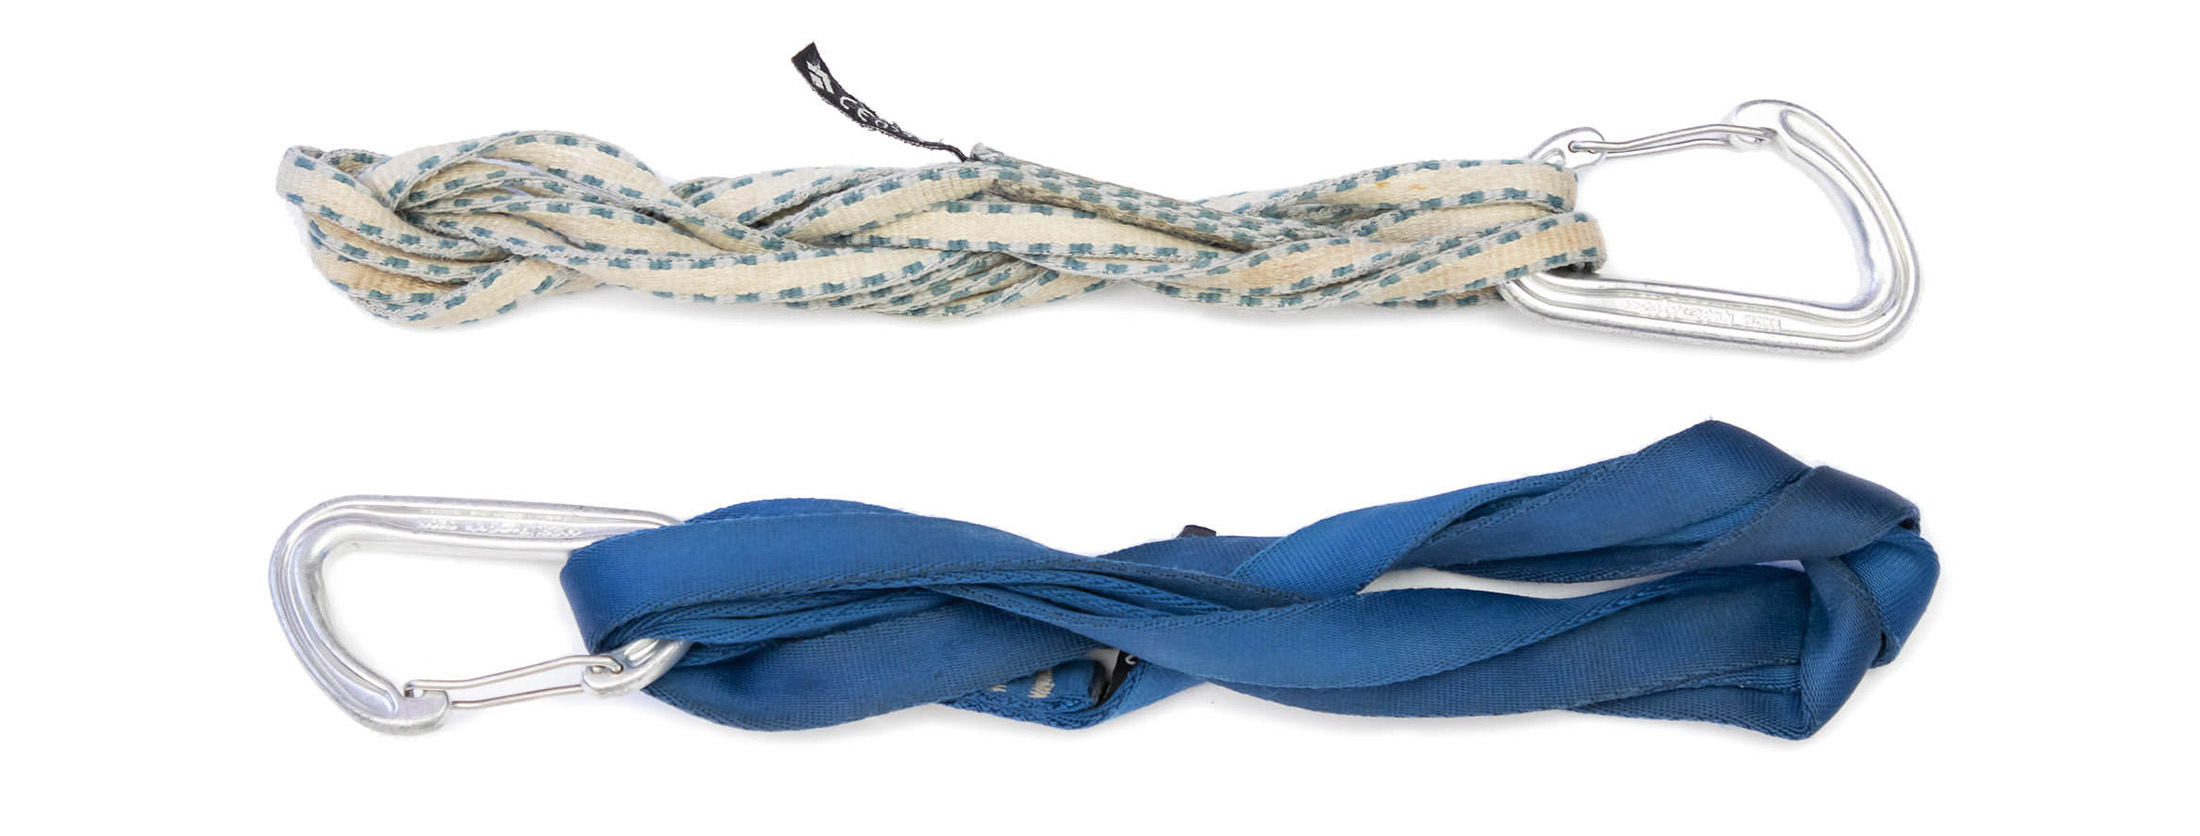 dyneema sling and nylon sling